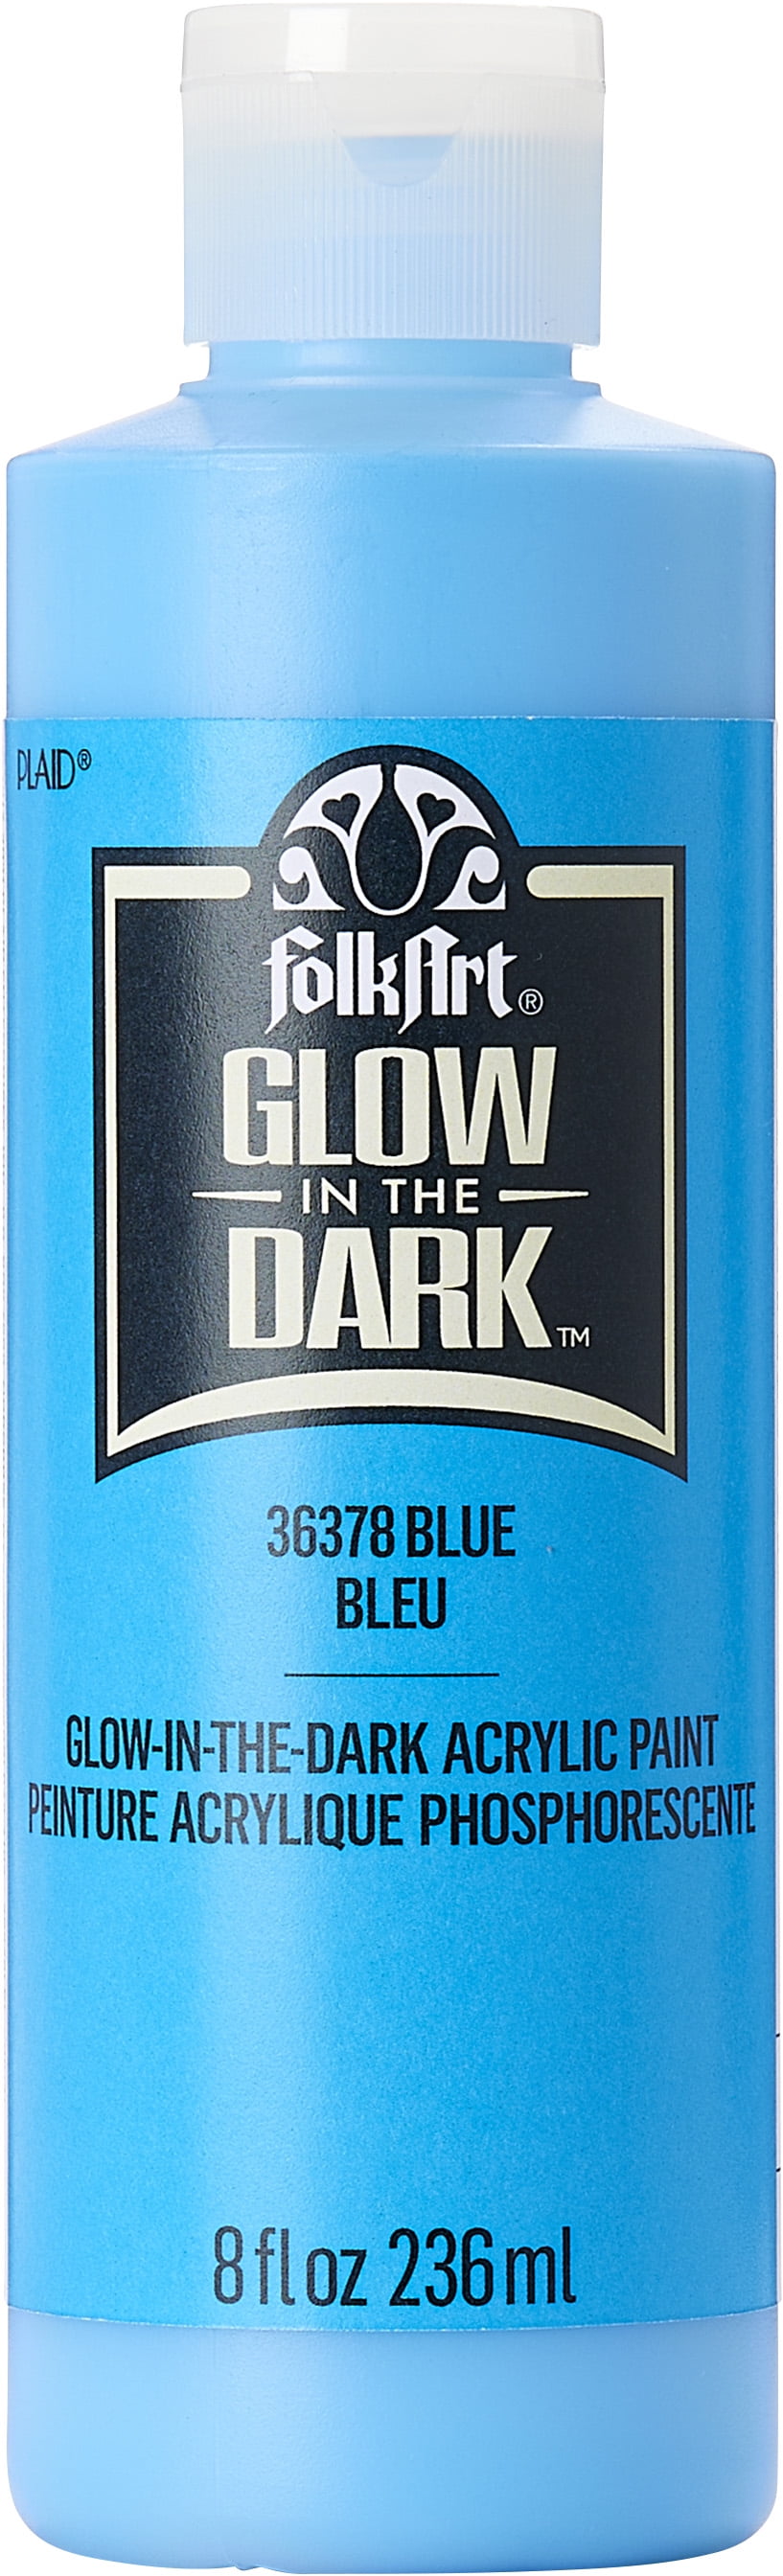 FolkArt Glow-in-the-Dark Acrylic Craft Paint, Matte Finish, Blue, 2 fl oz